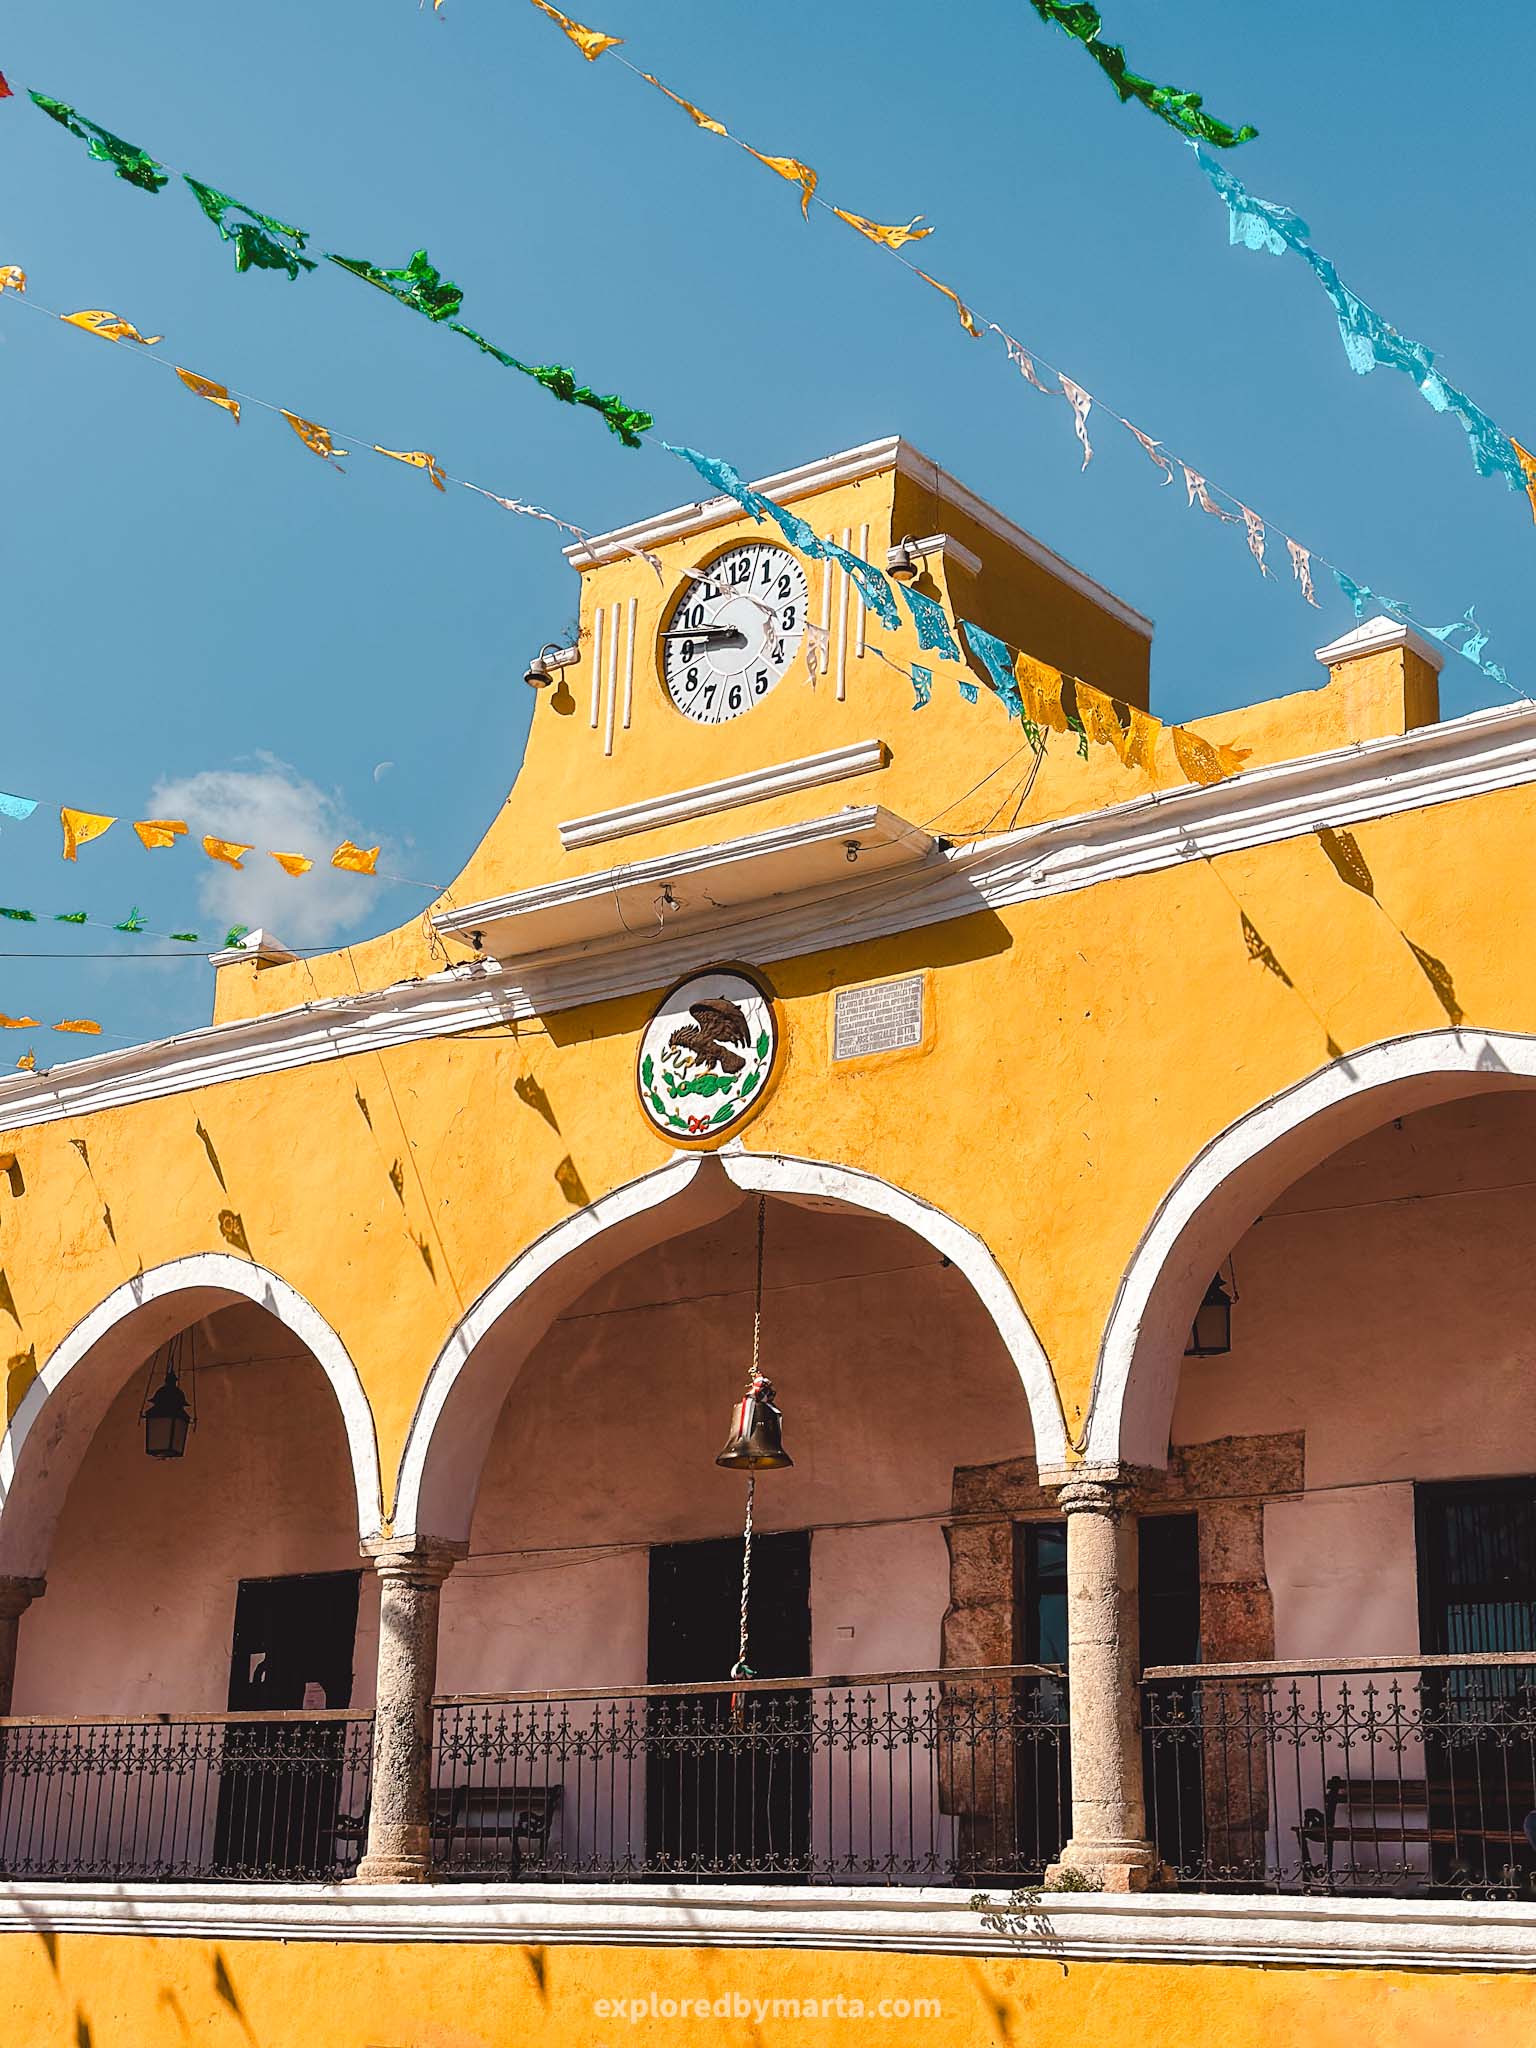 Izamal, Mexico-the yellow Palacio Municipal Izamal or the Town Hall of Izamal is an impressive yellow building situated at 5 de Mayo Park and features a beautiful arcade